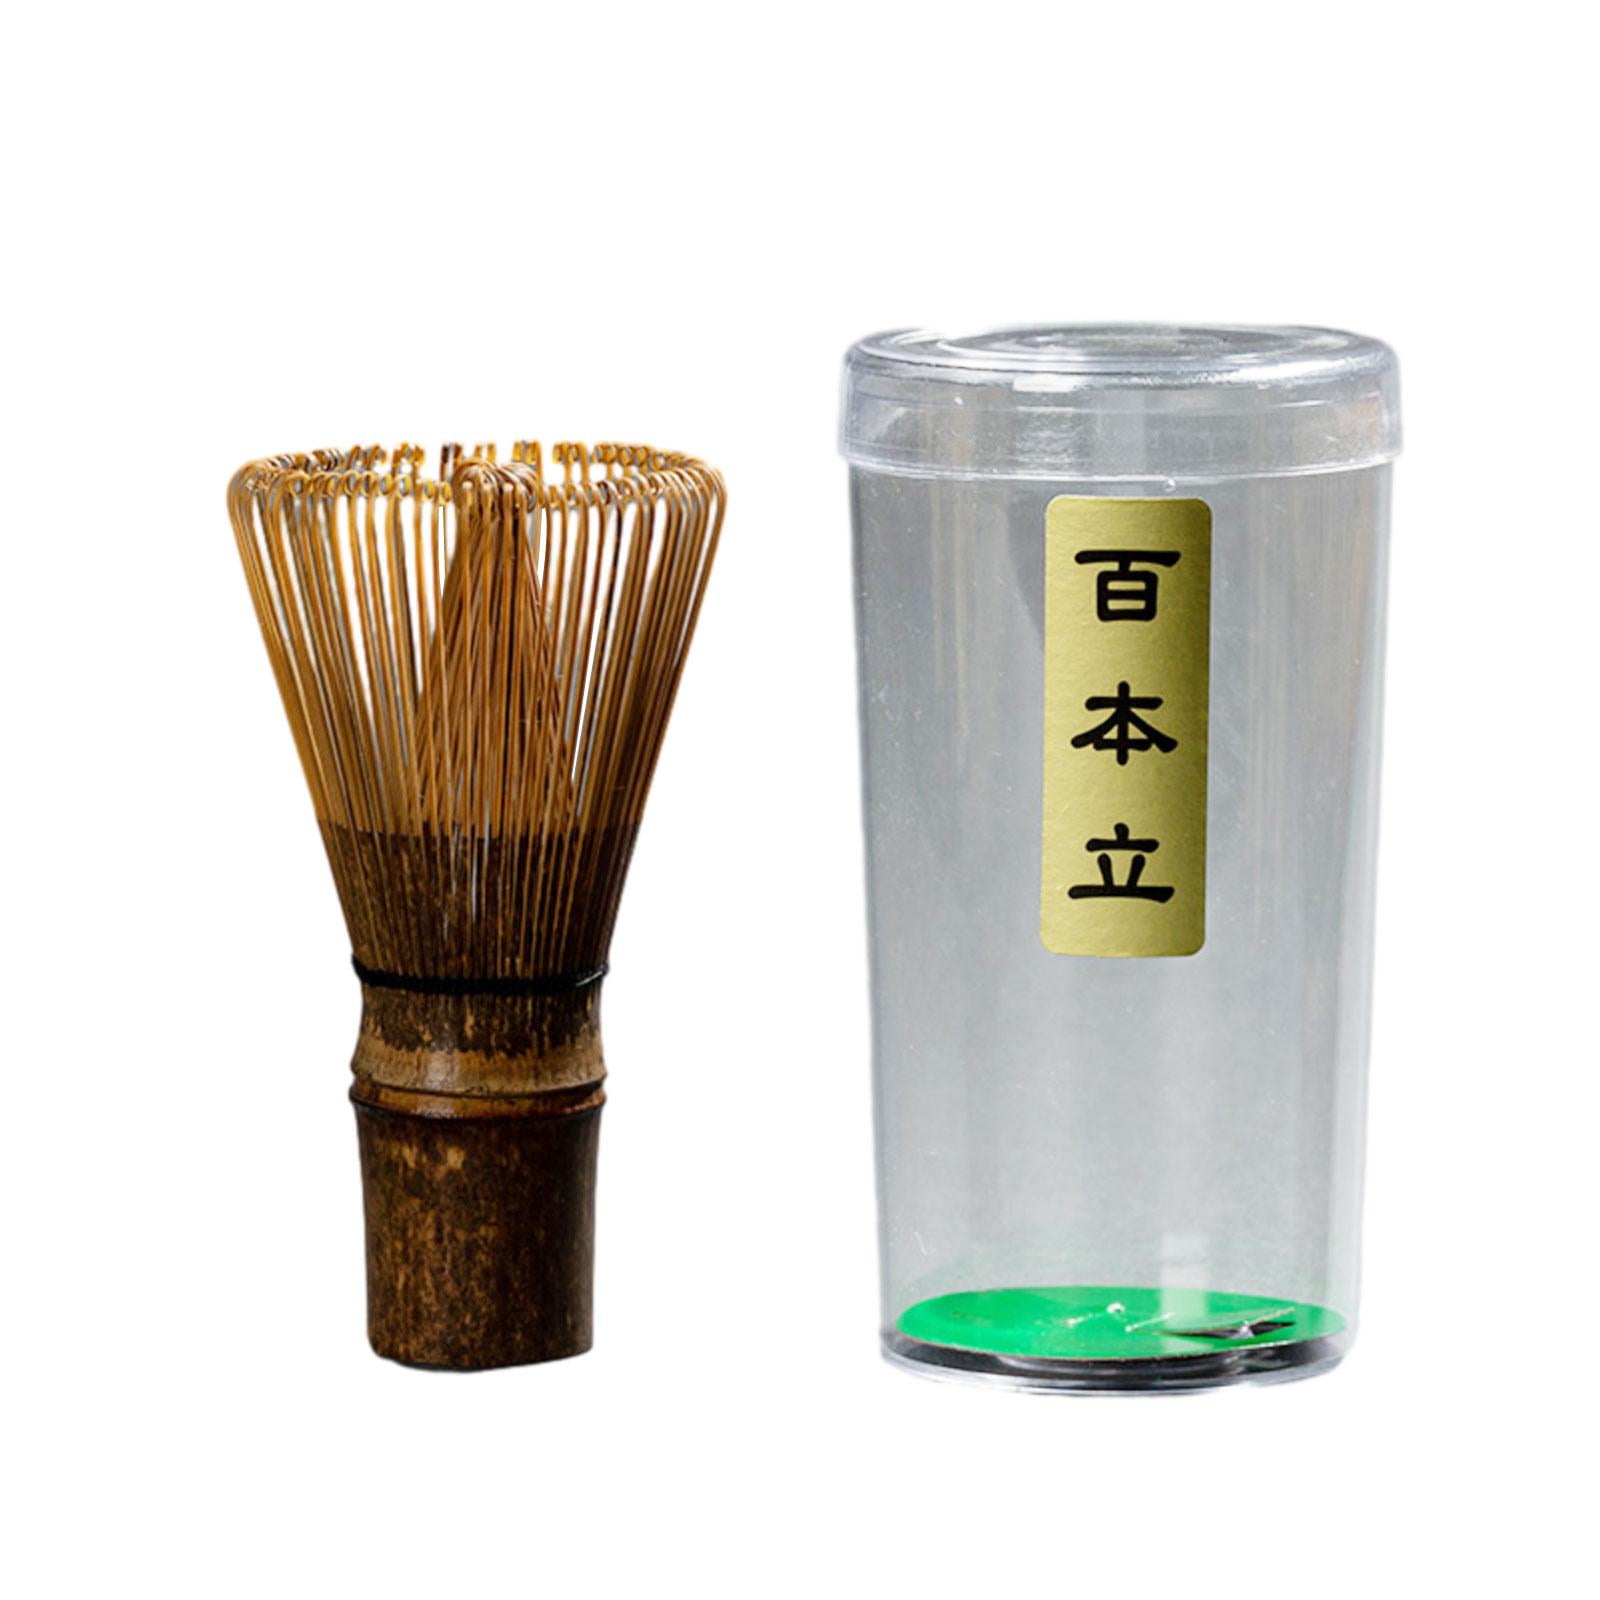 Helen's Asian Kitchen 80 Tines Bamboo 4.5-inch Matcha Tea Whisk